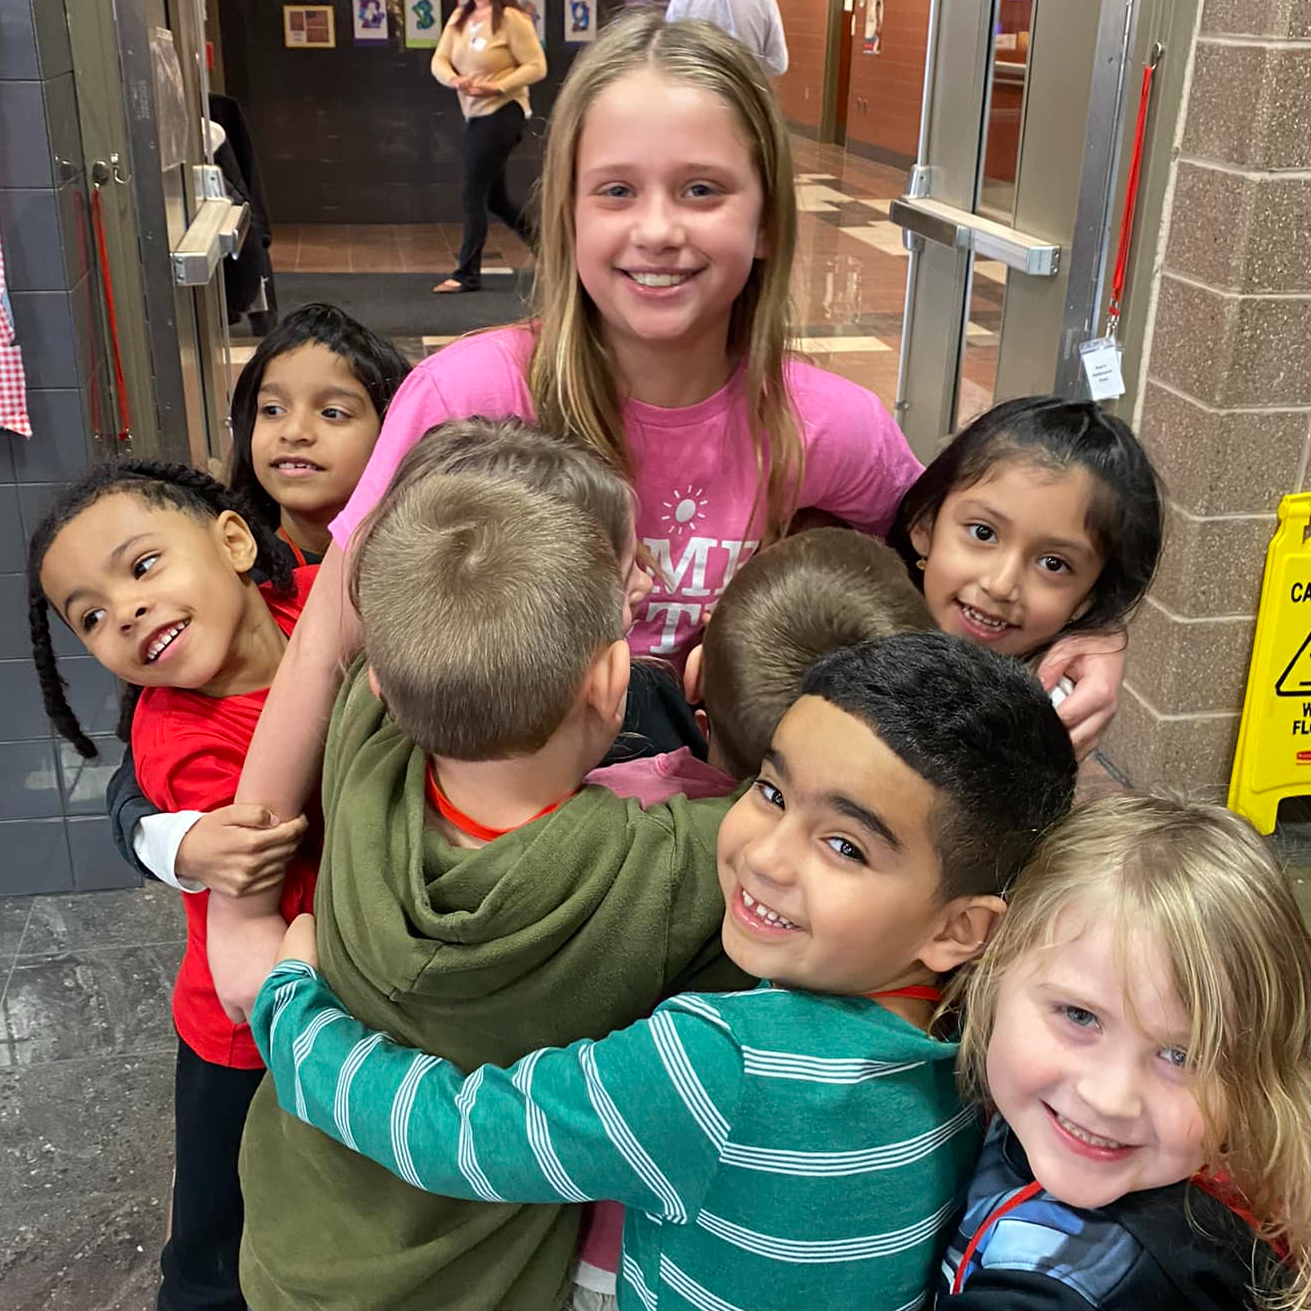 Group of smiling children hugging older student in colorful shirt.